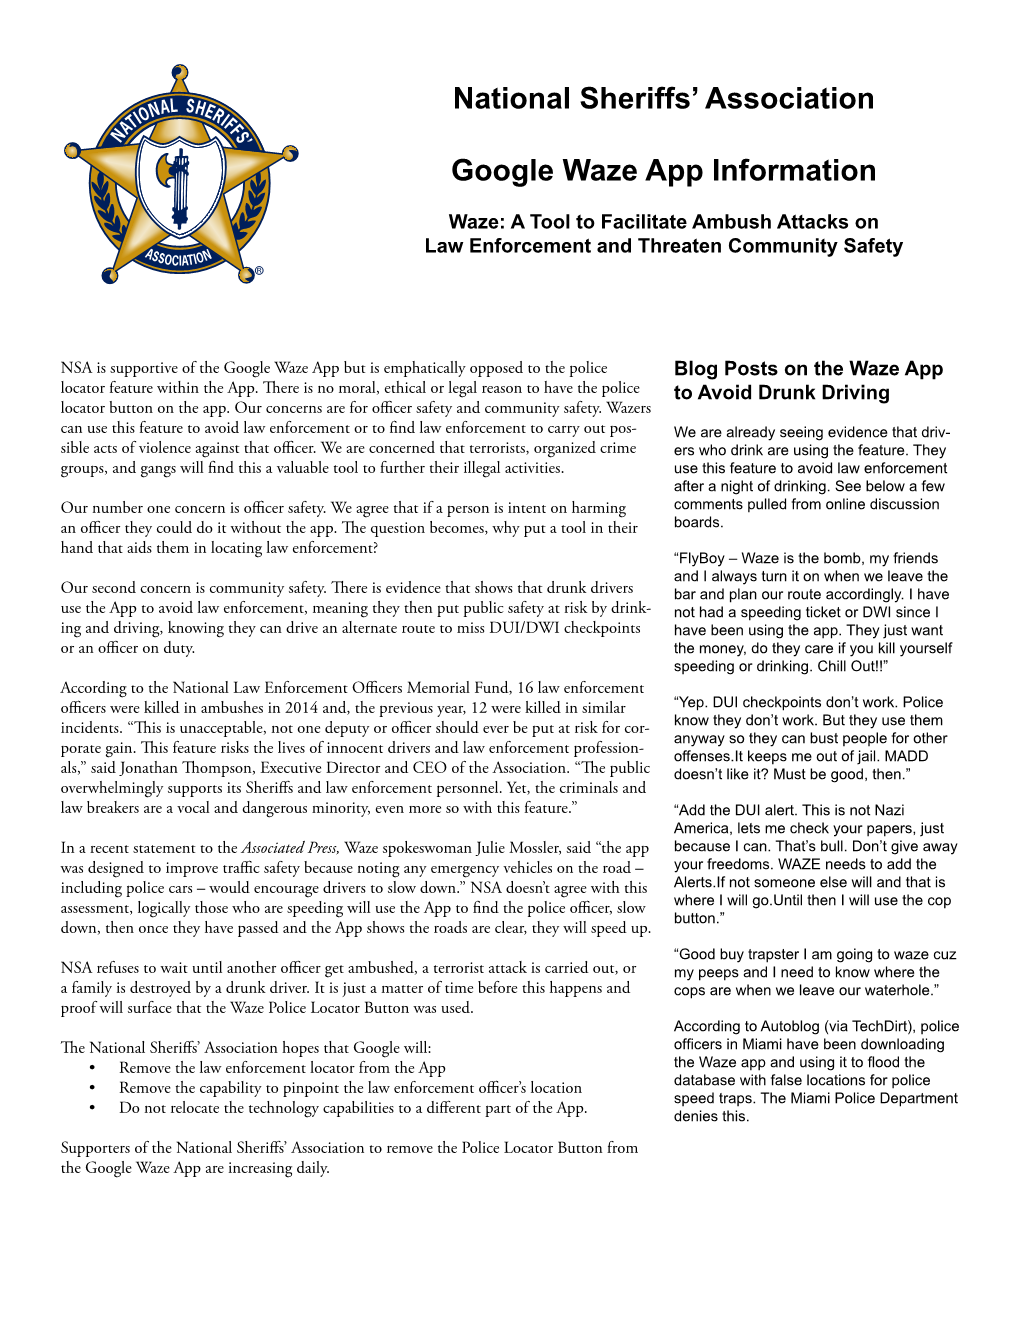 National Sheriffs' Association Google Waze App Information